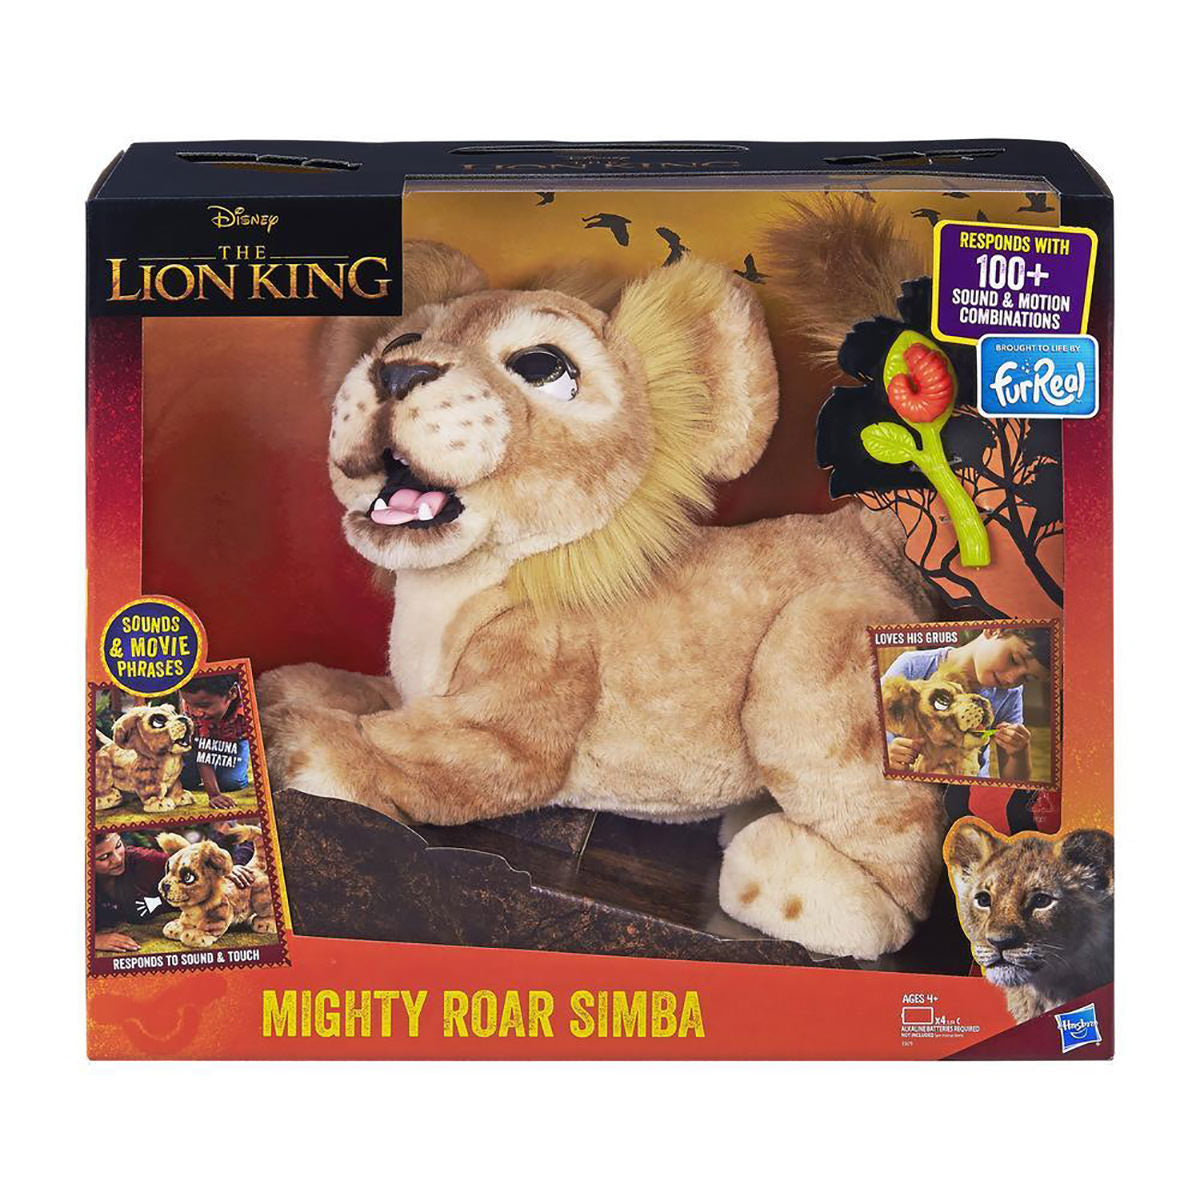 DISNEY FURREAL THE LION KING MIGHTY ROAR SIMBA